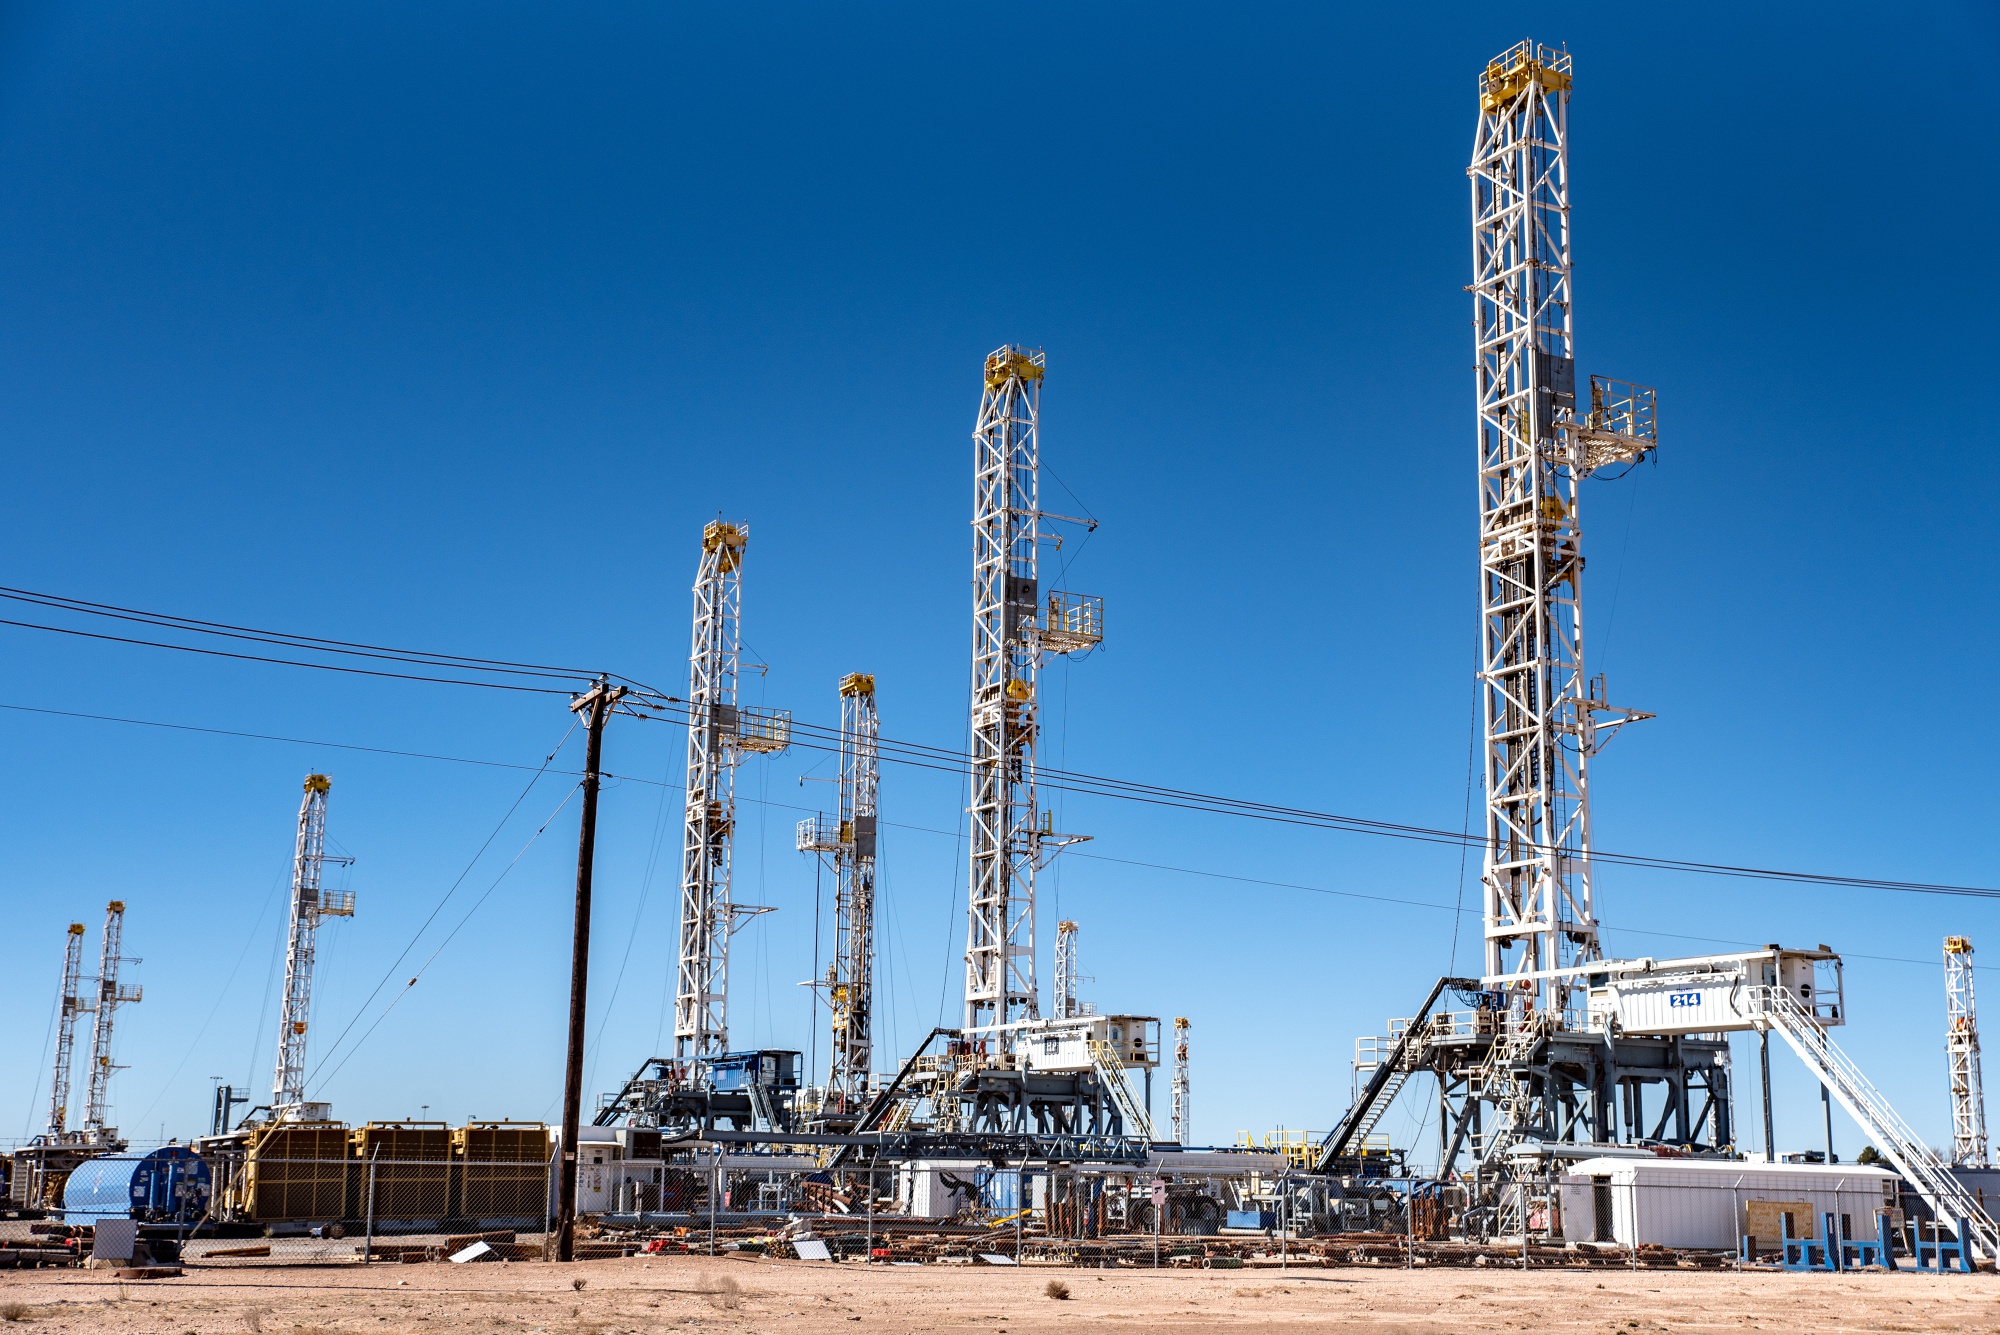 The oil rigs are in the Permian Basin region of Odessa, Texas.